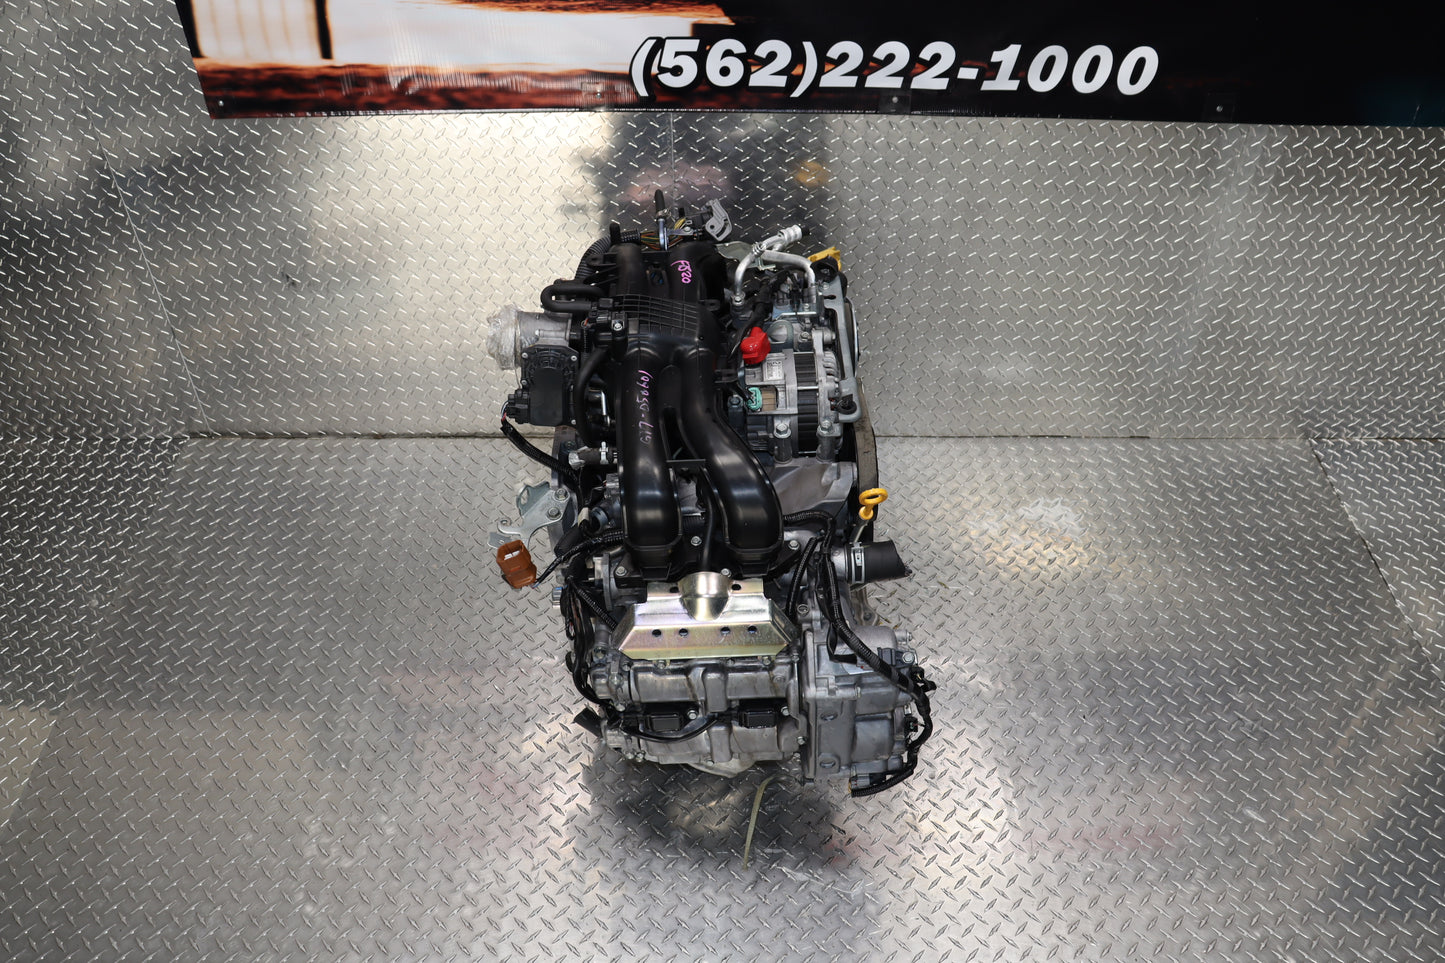 JDM FB20 2012 2013 2014 SUBARU CROSSTREK XV 2.0L DOHC AVCS ENGINE